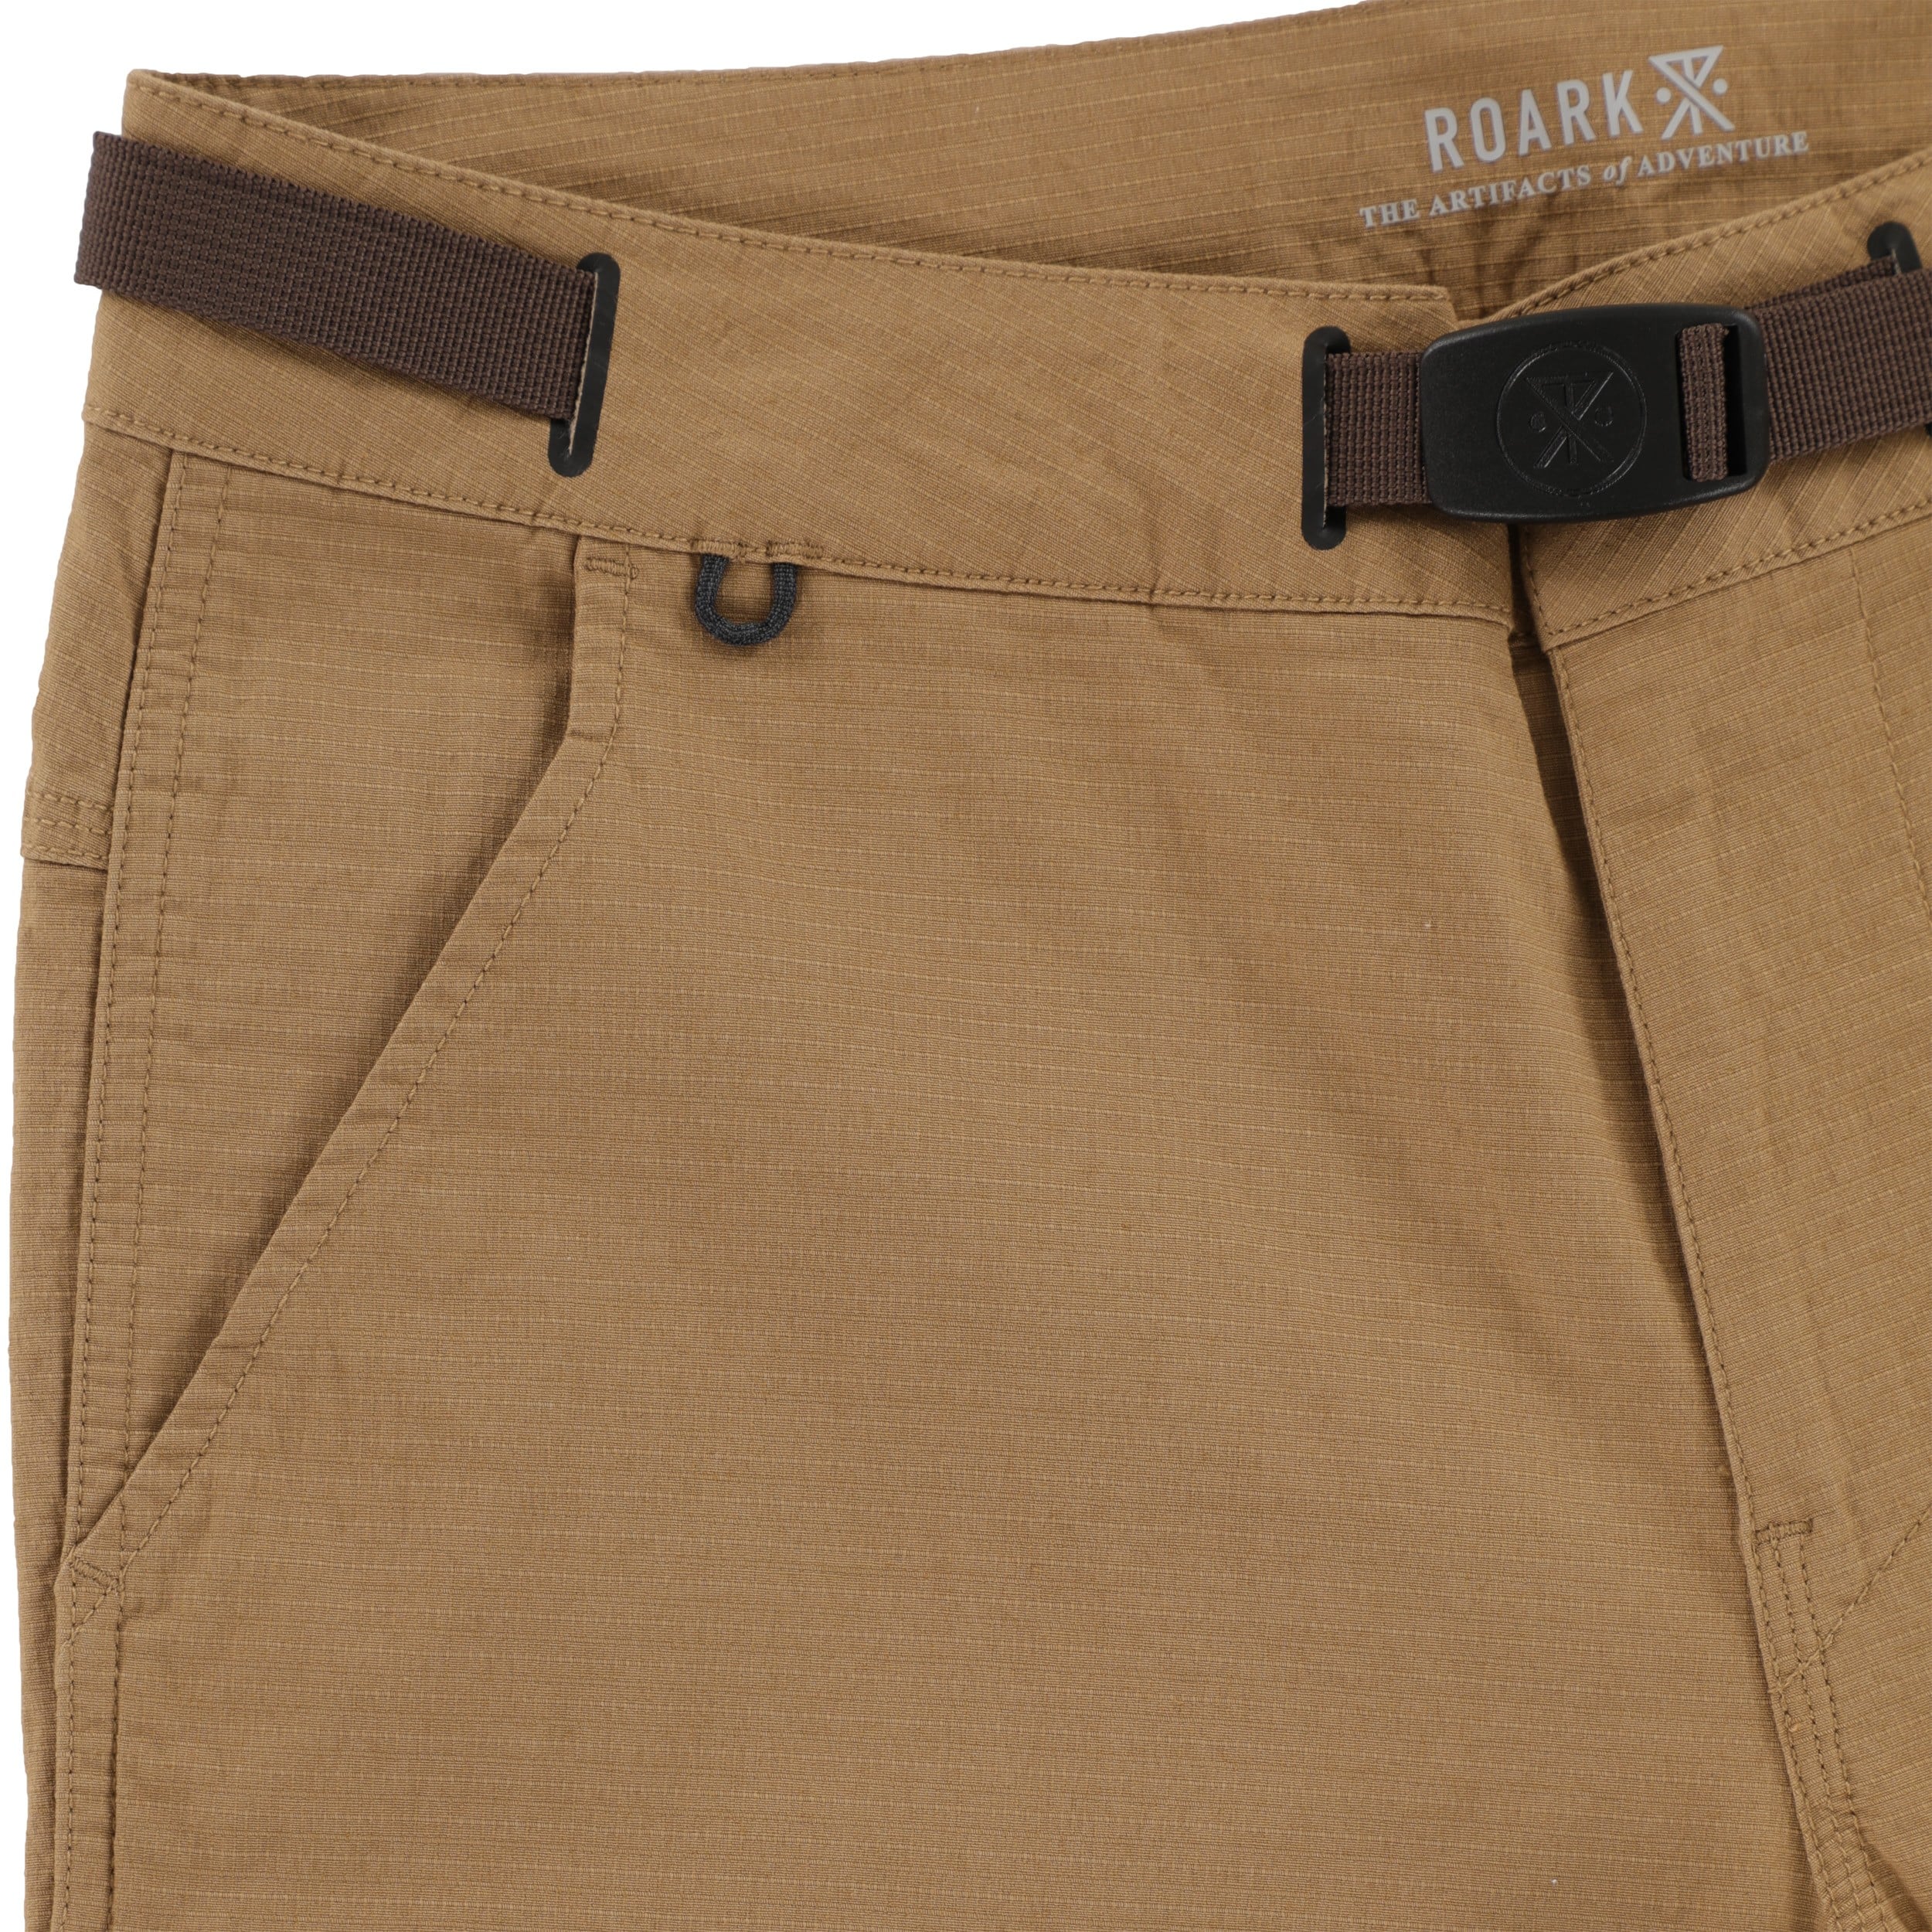 Roark Campover Cargo Pants - dark khaki | Tactics